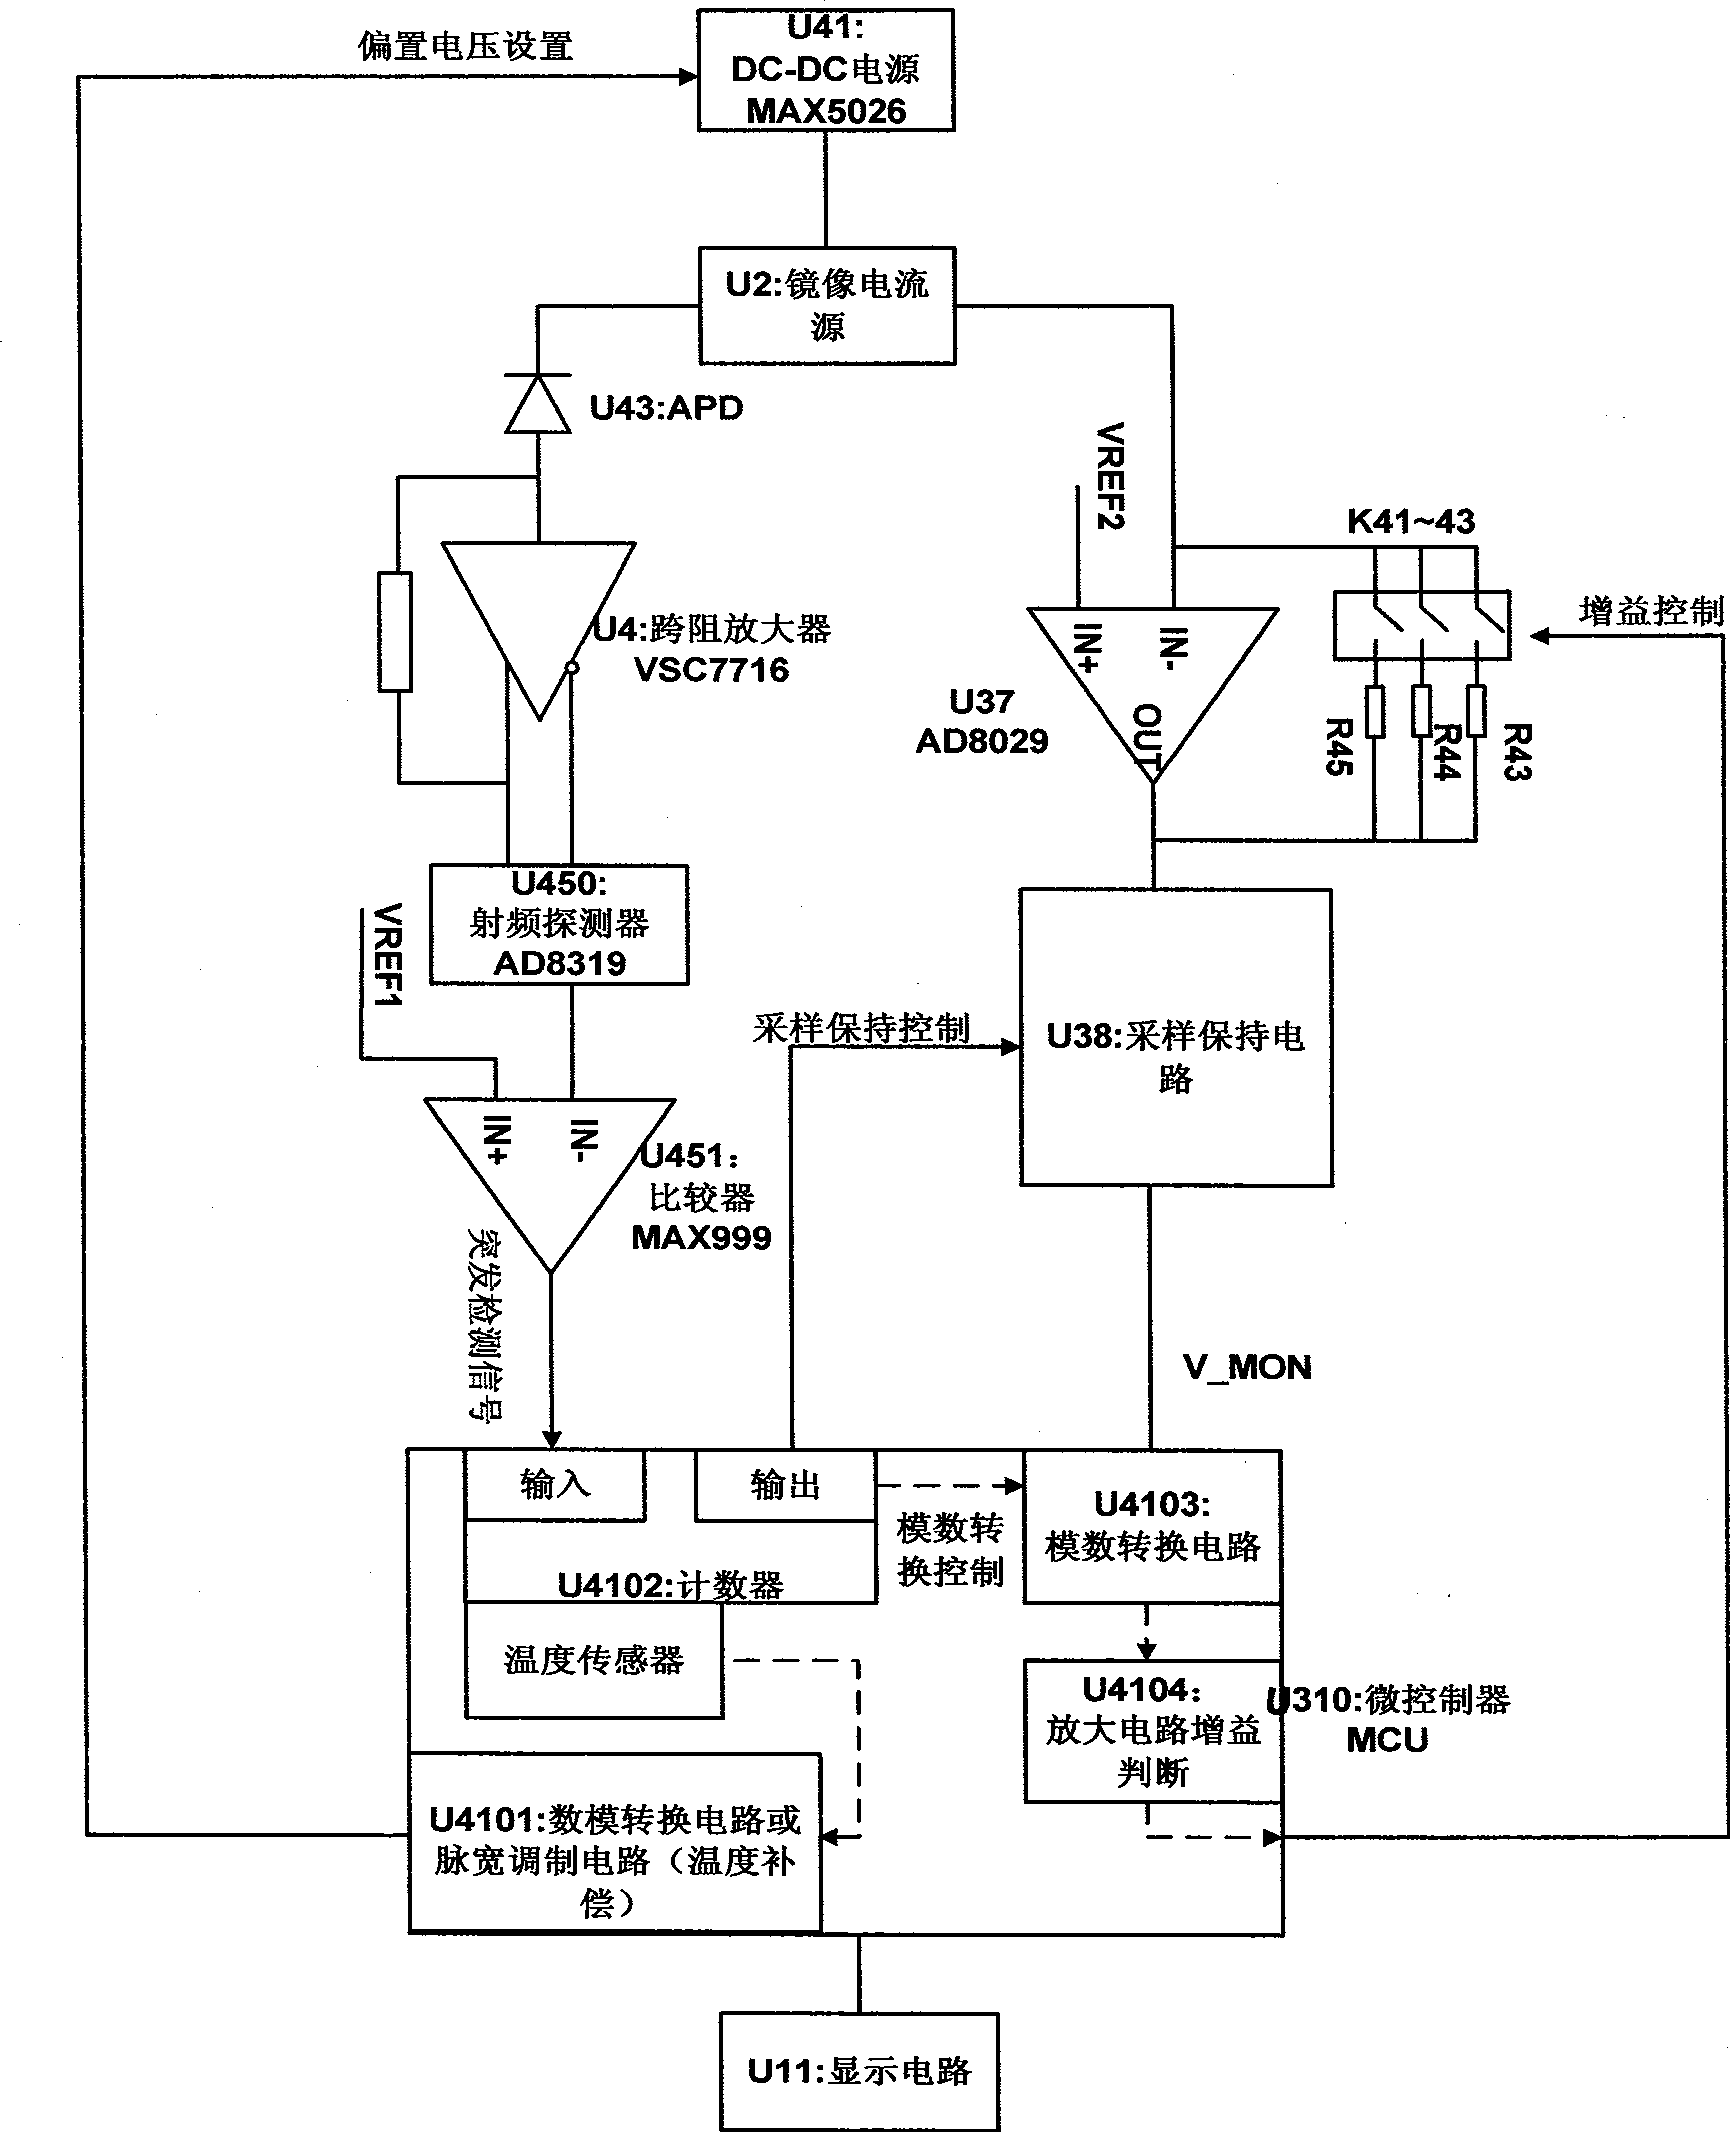 Circuit for measuring outburst mode optical signal power